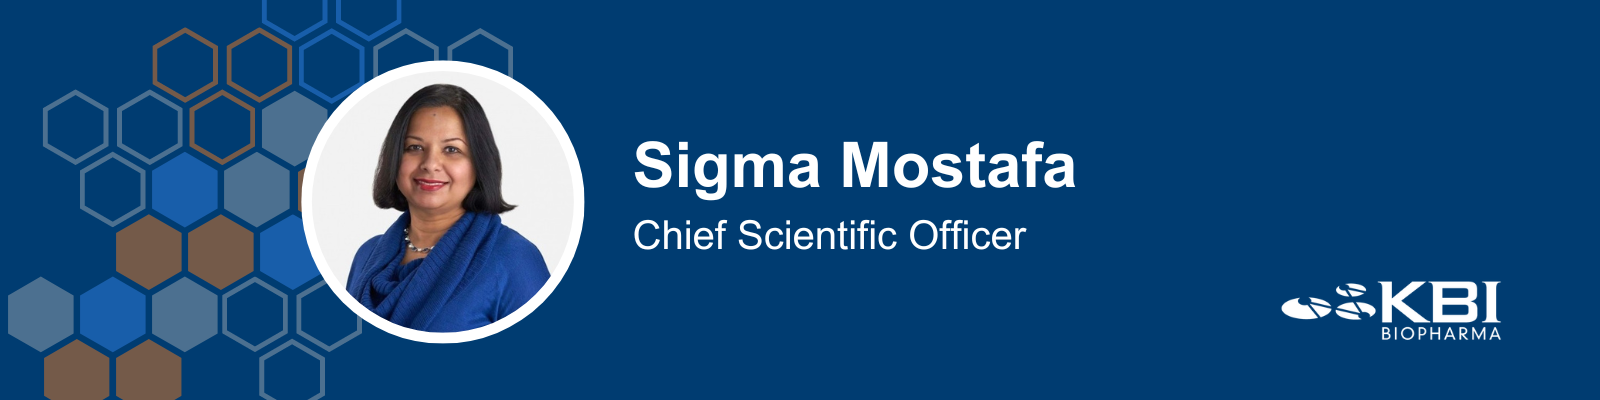 Sigma Mostafa - Celebrating Women in Science - Blog (1)